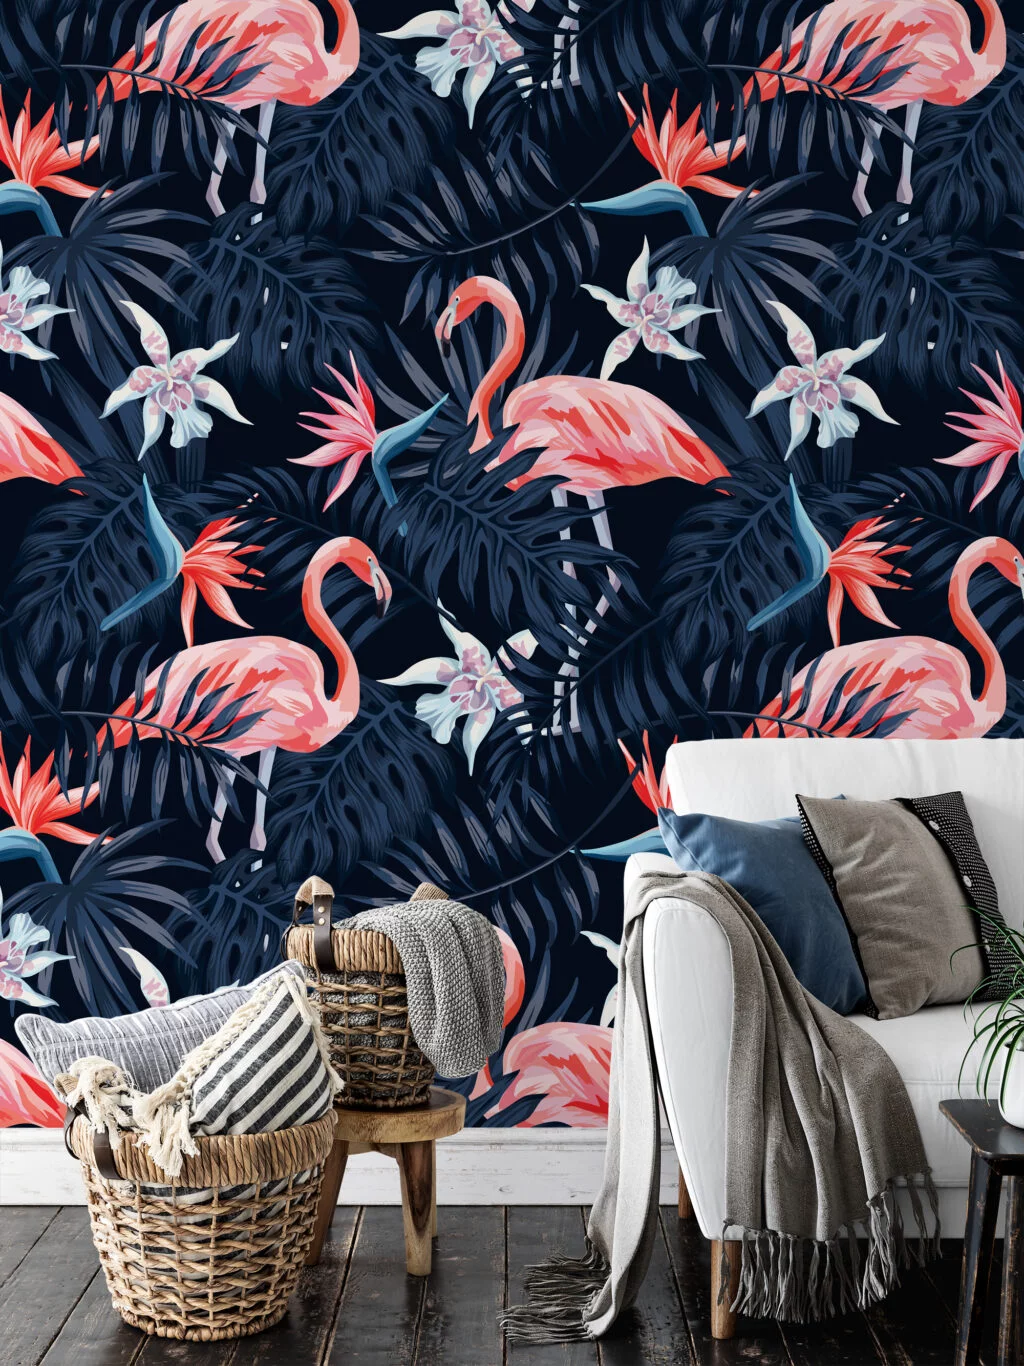 Dark Blue Tropical Leaves With Flamingos Illustration Wallpaper, Majestic Flamingos Peel & Stick Wall Mural